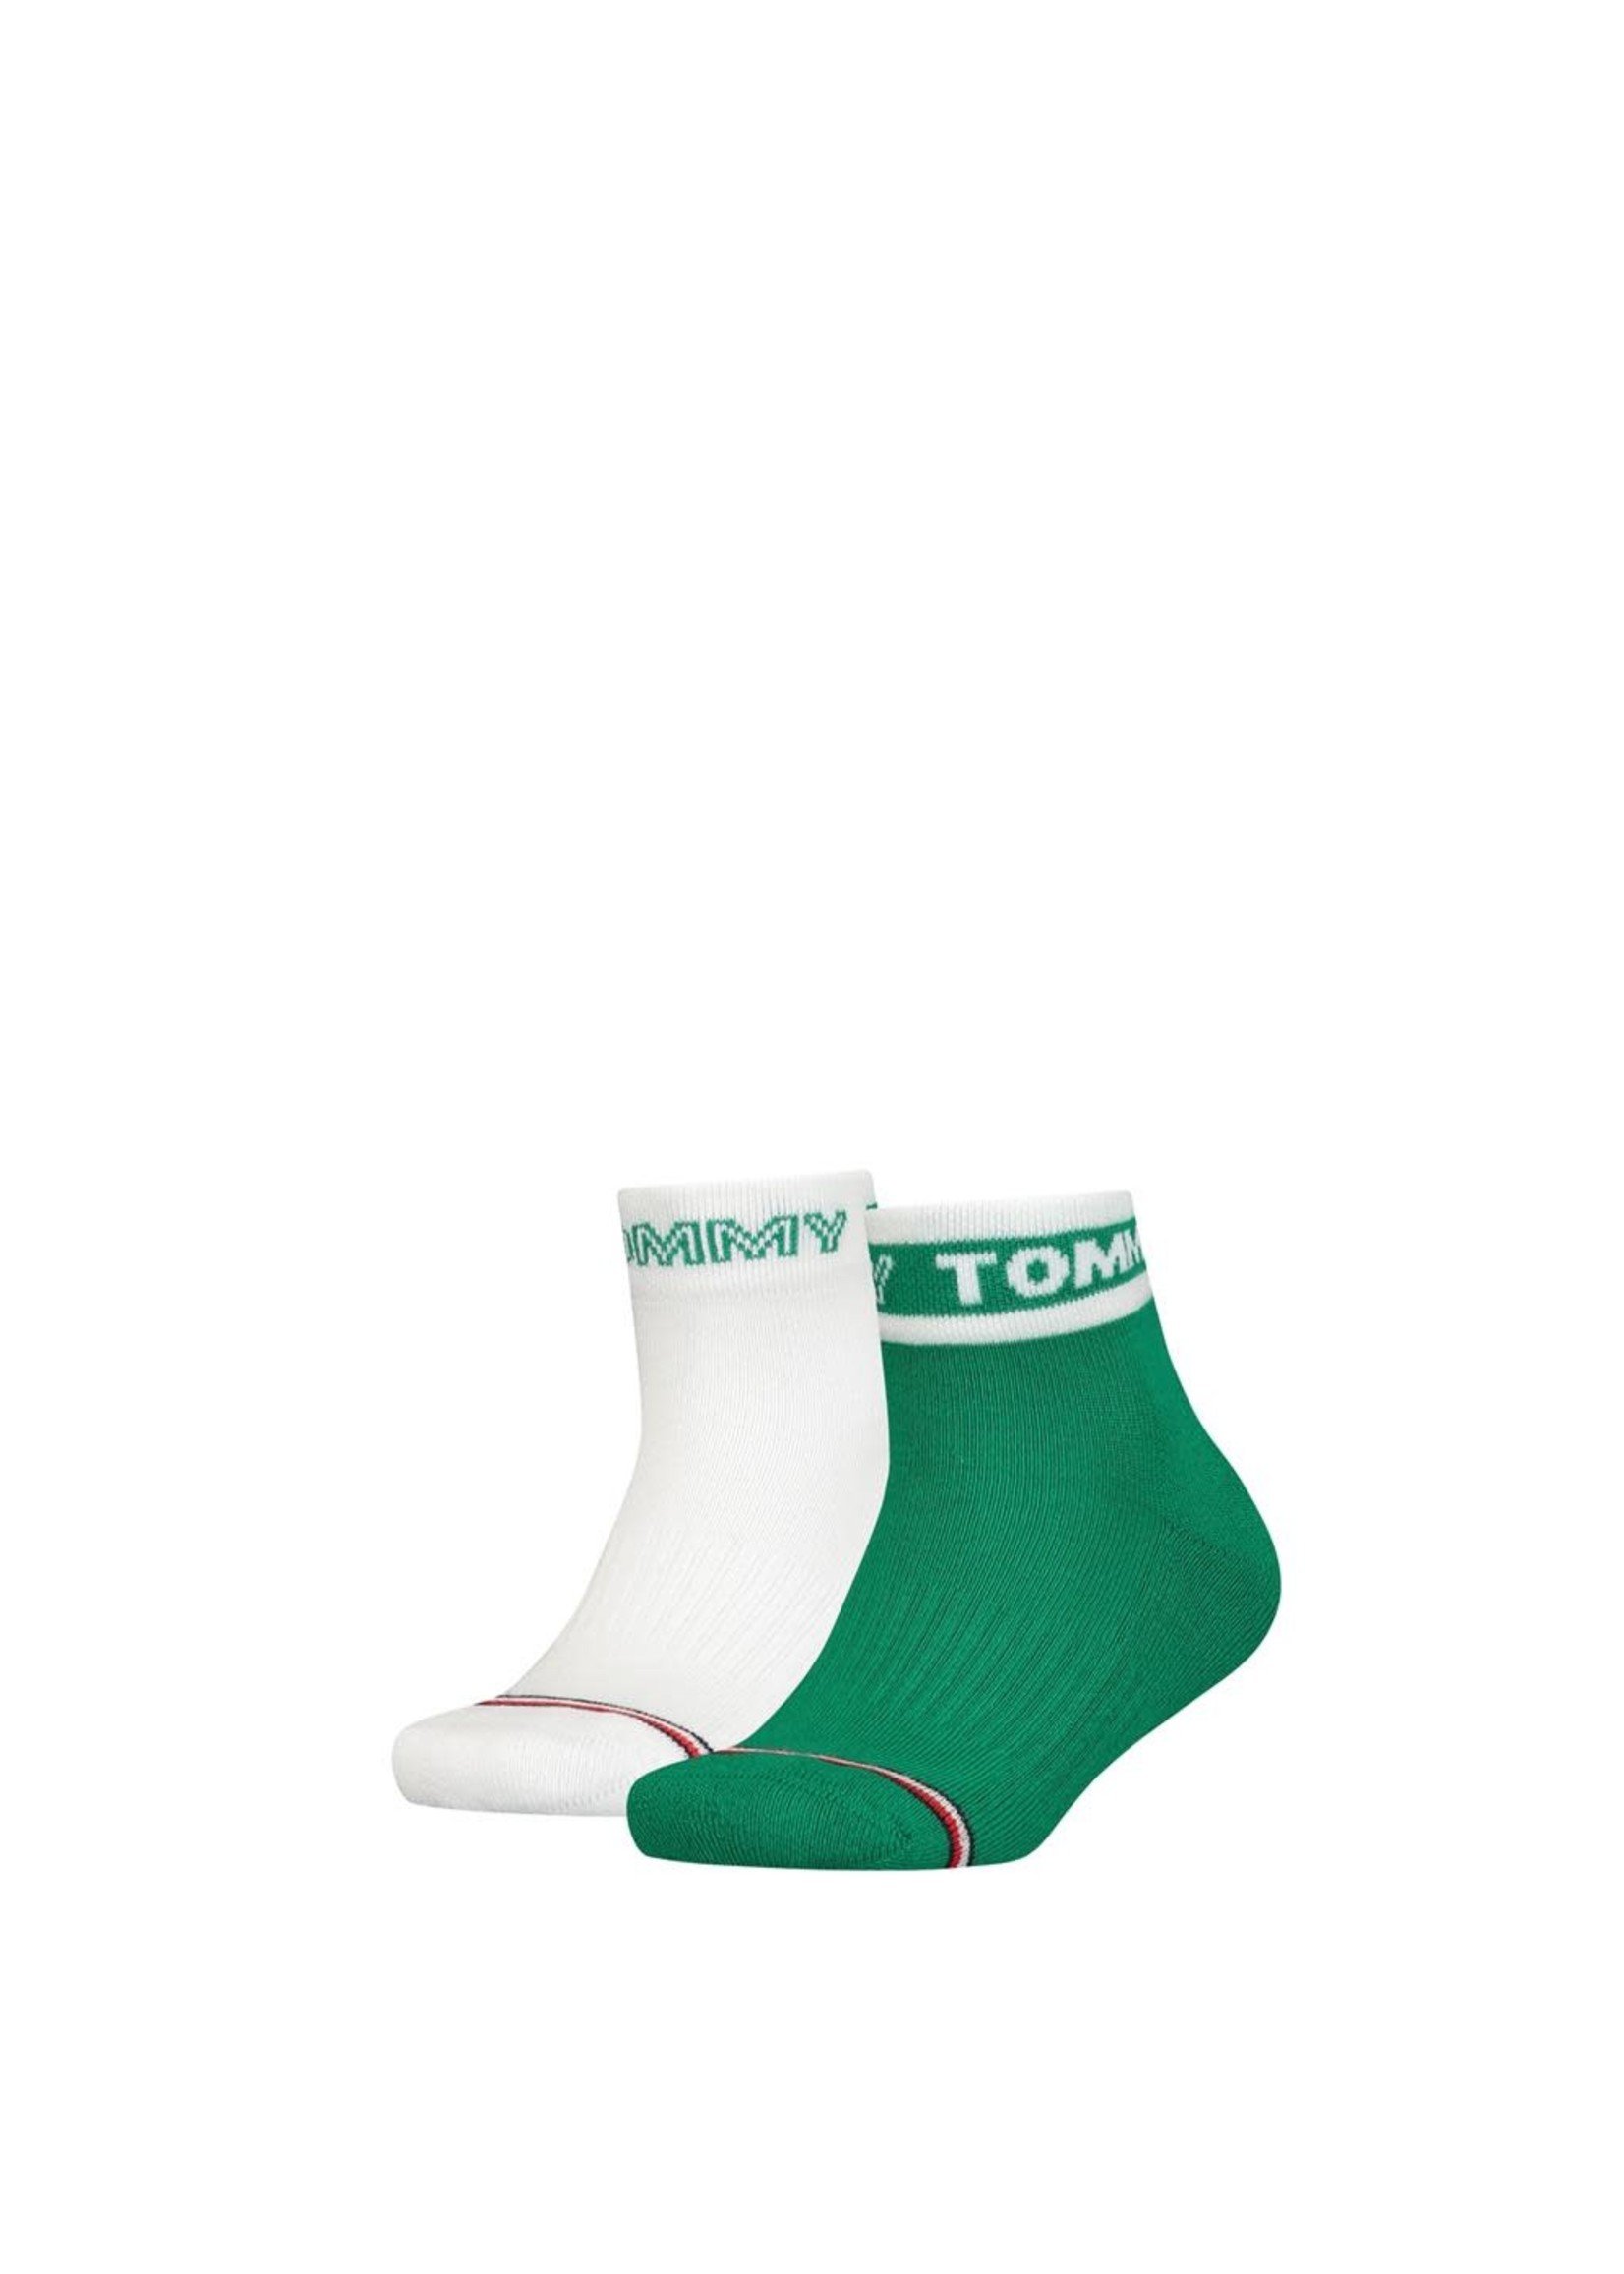 Tommy Hilfiger Tommy Hilfiger sokken groen/wit  2 paar